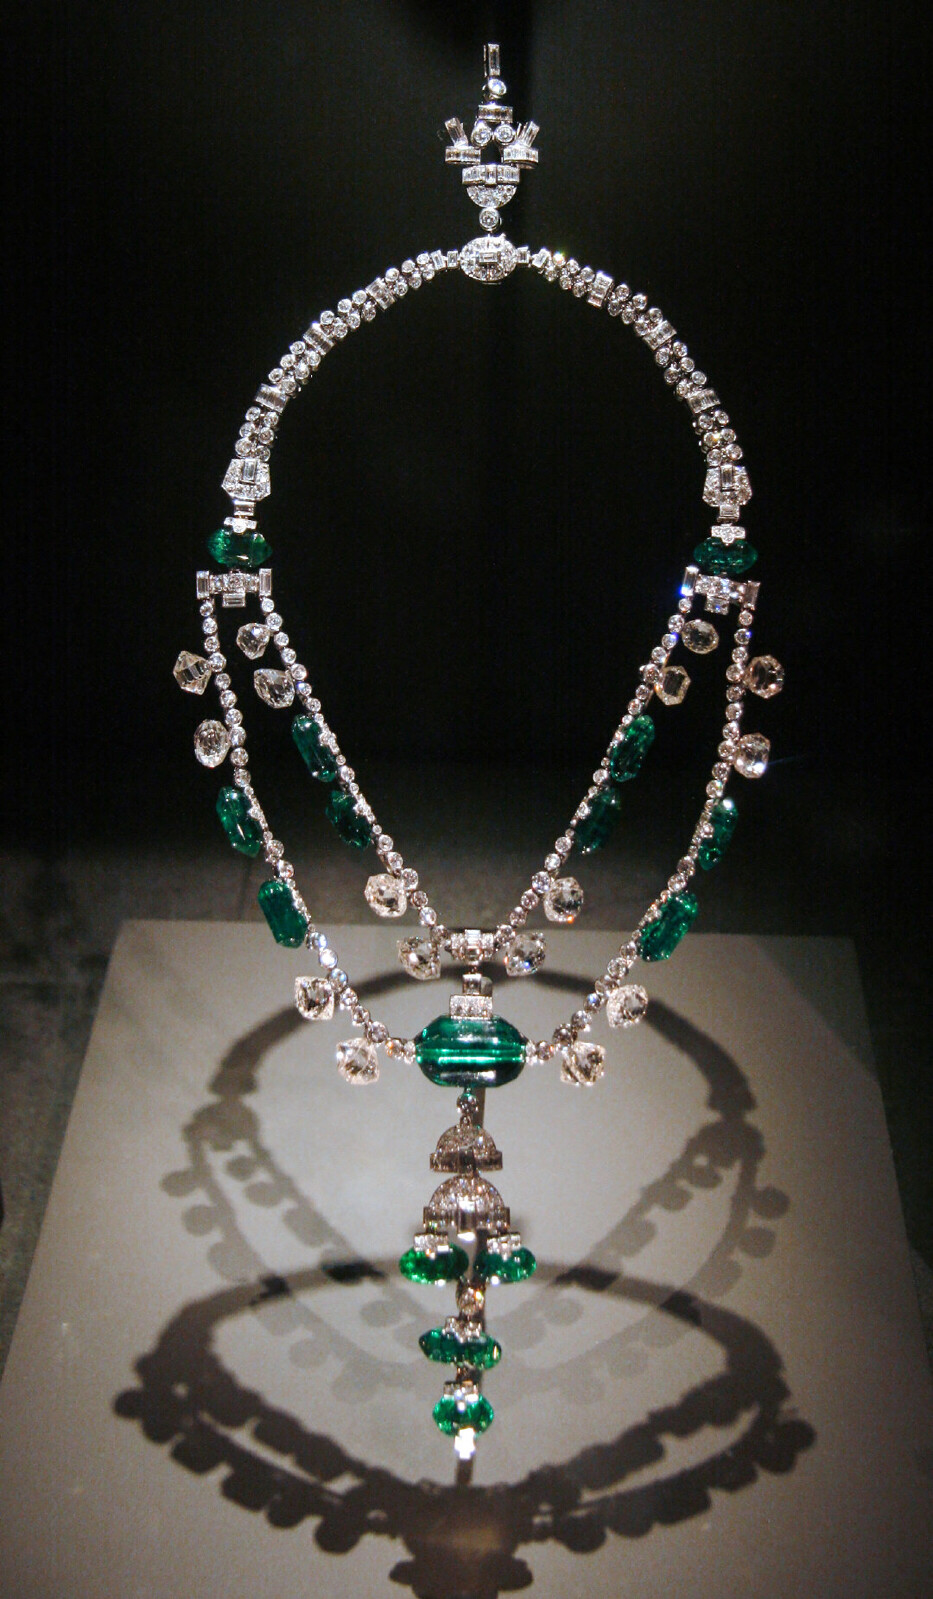 spanish inquisition necklace｜西班牙宗教裁判项链，项链中总共有 15 颗大祖母绿、16 颗大钻石和大约 120 颗小钻石。最大的祖母绿是一颗古老的印度切割 45 克祖母绿，放置在项链的中央。原属于印度印多尔大君，后被被海瑞温斯顿收购